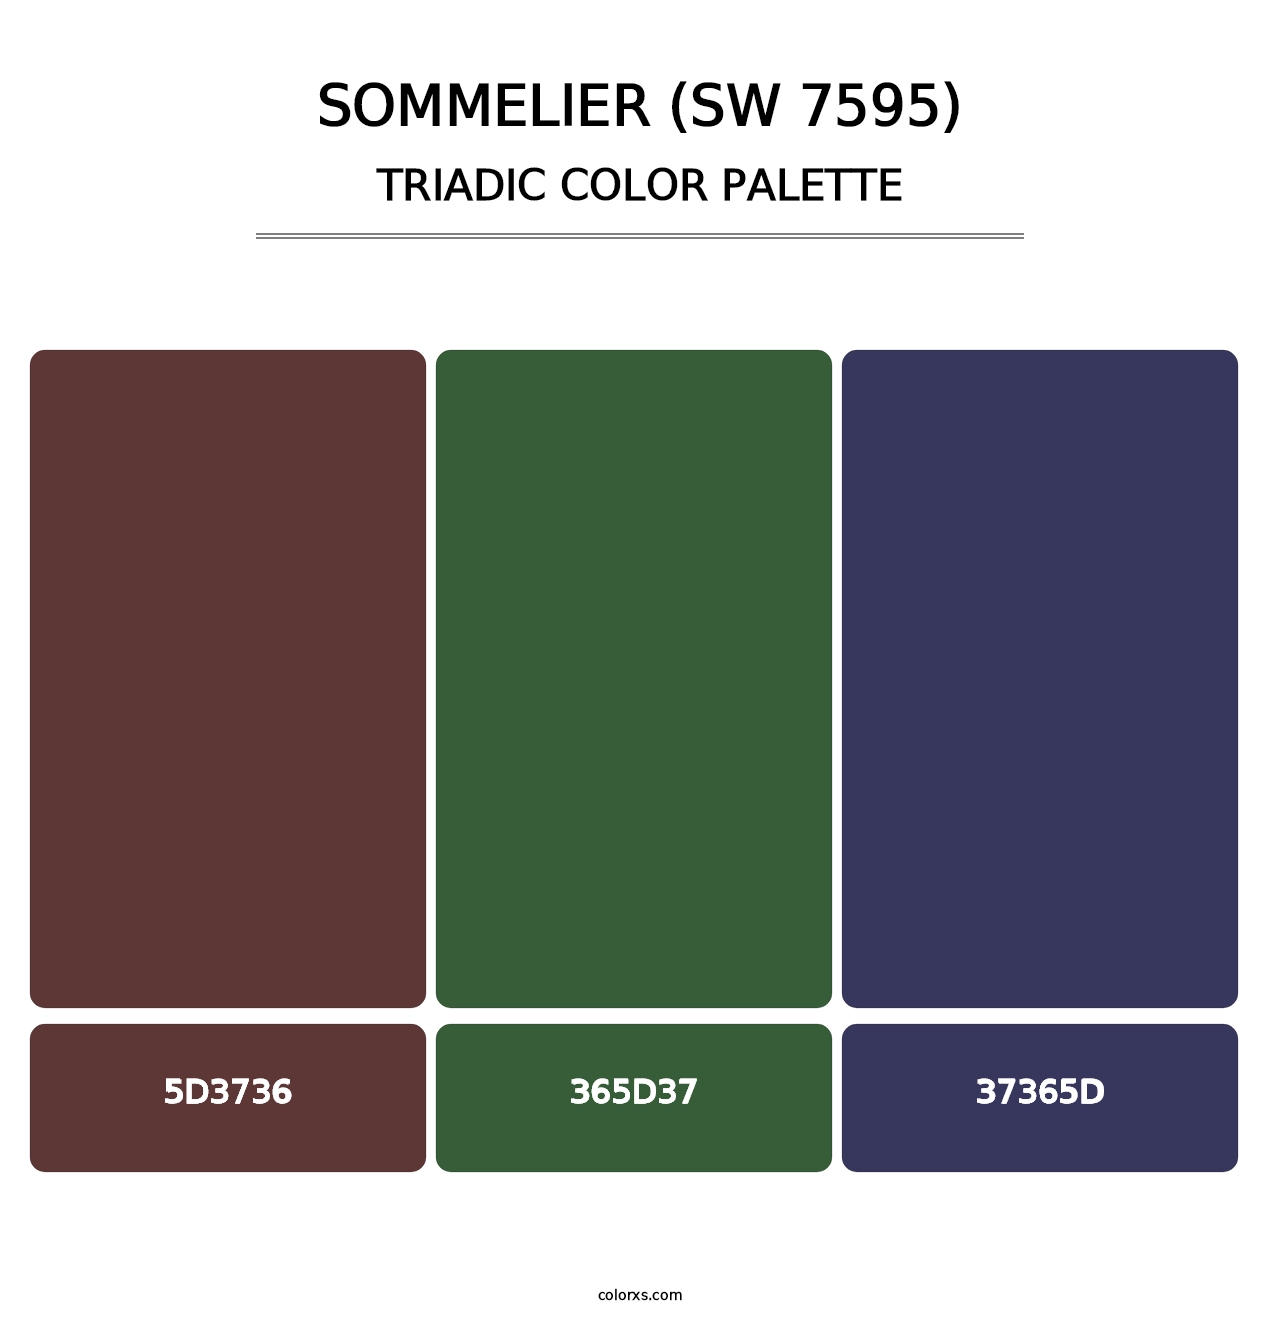 Sommelier (SW 7595) - Triadic Color Palette